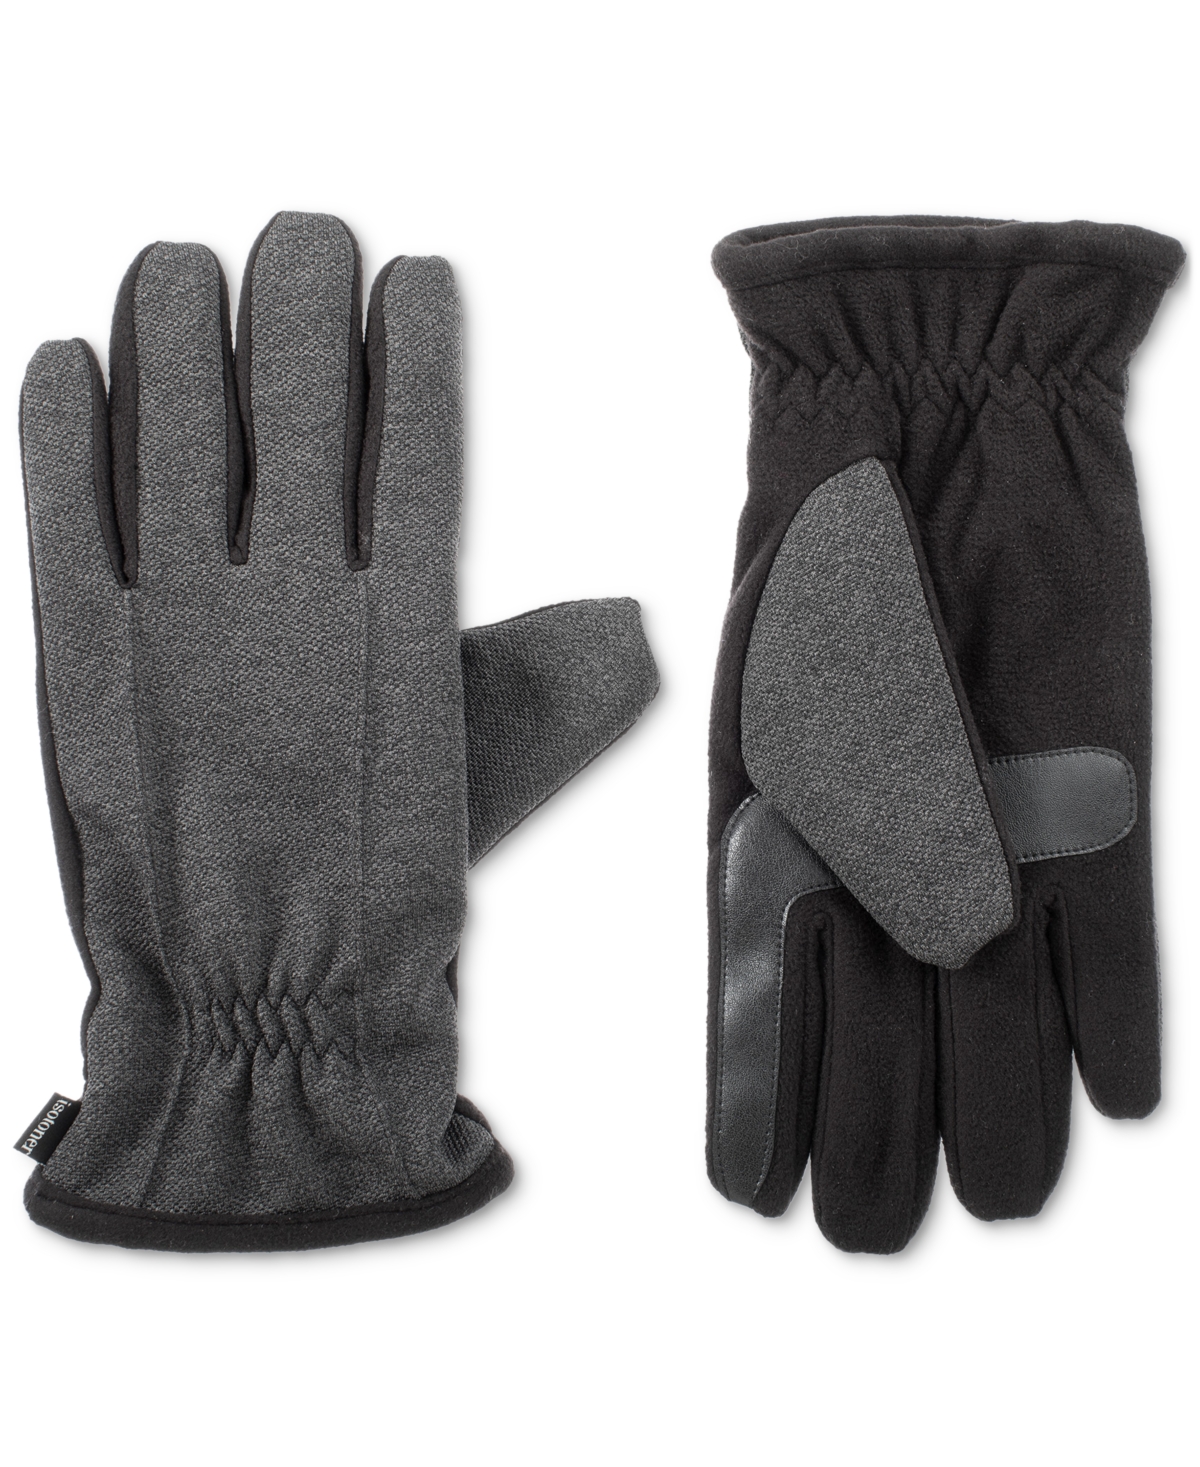 Men's Active Gloves - Oxford